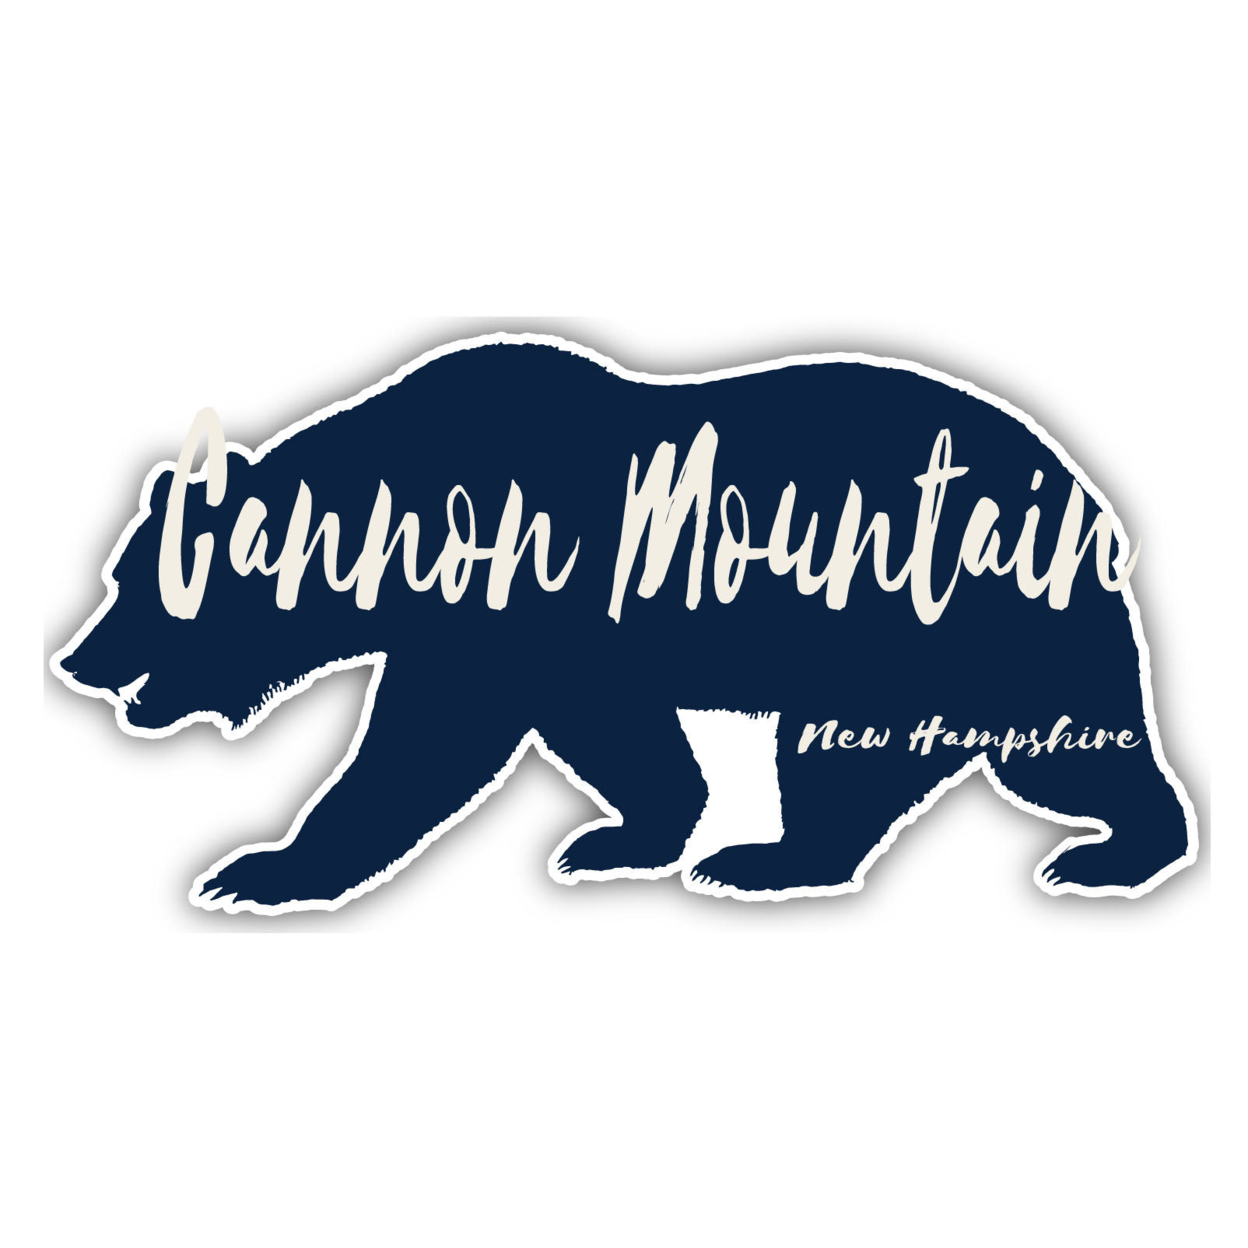 Cannon Mountain New Hampshire Souvenir Decorative Stickers (Choose Theme And Size) - Single Unit, 4-Inch, Bear